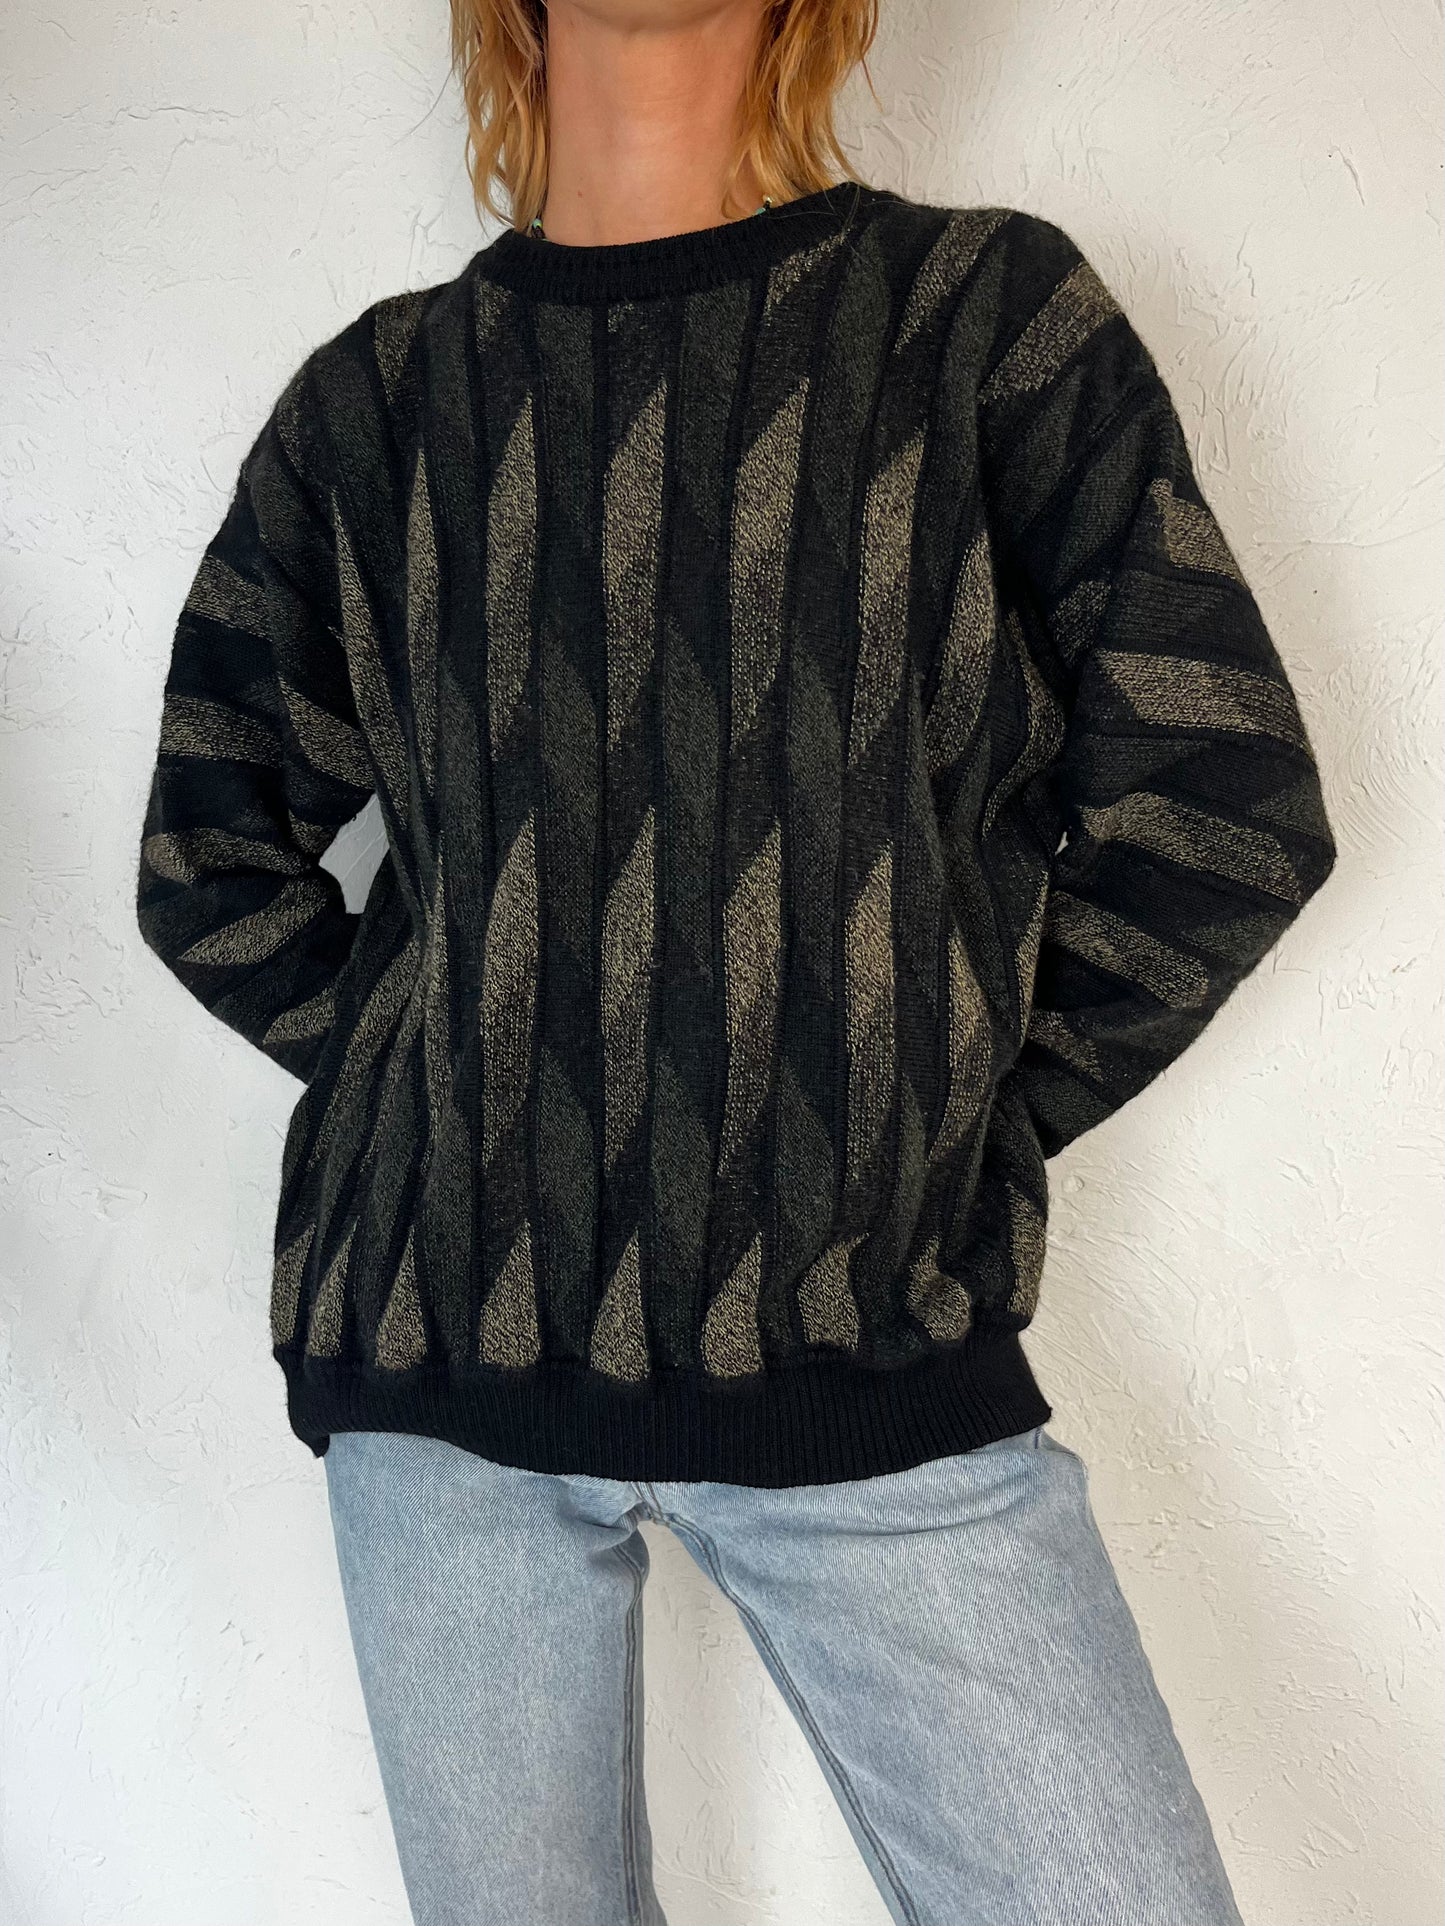 Y2K Wool Acrylic Knit Grandpa Sweater / Medium